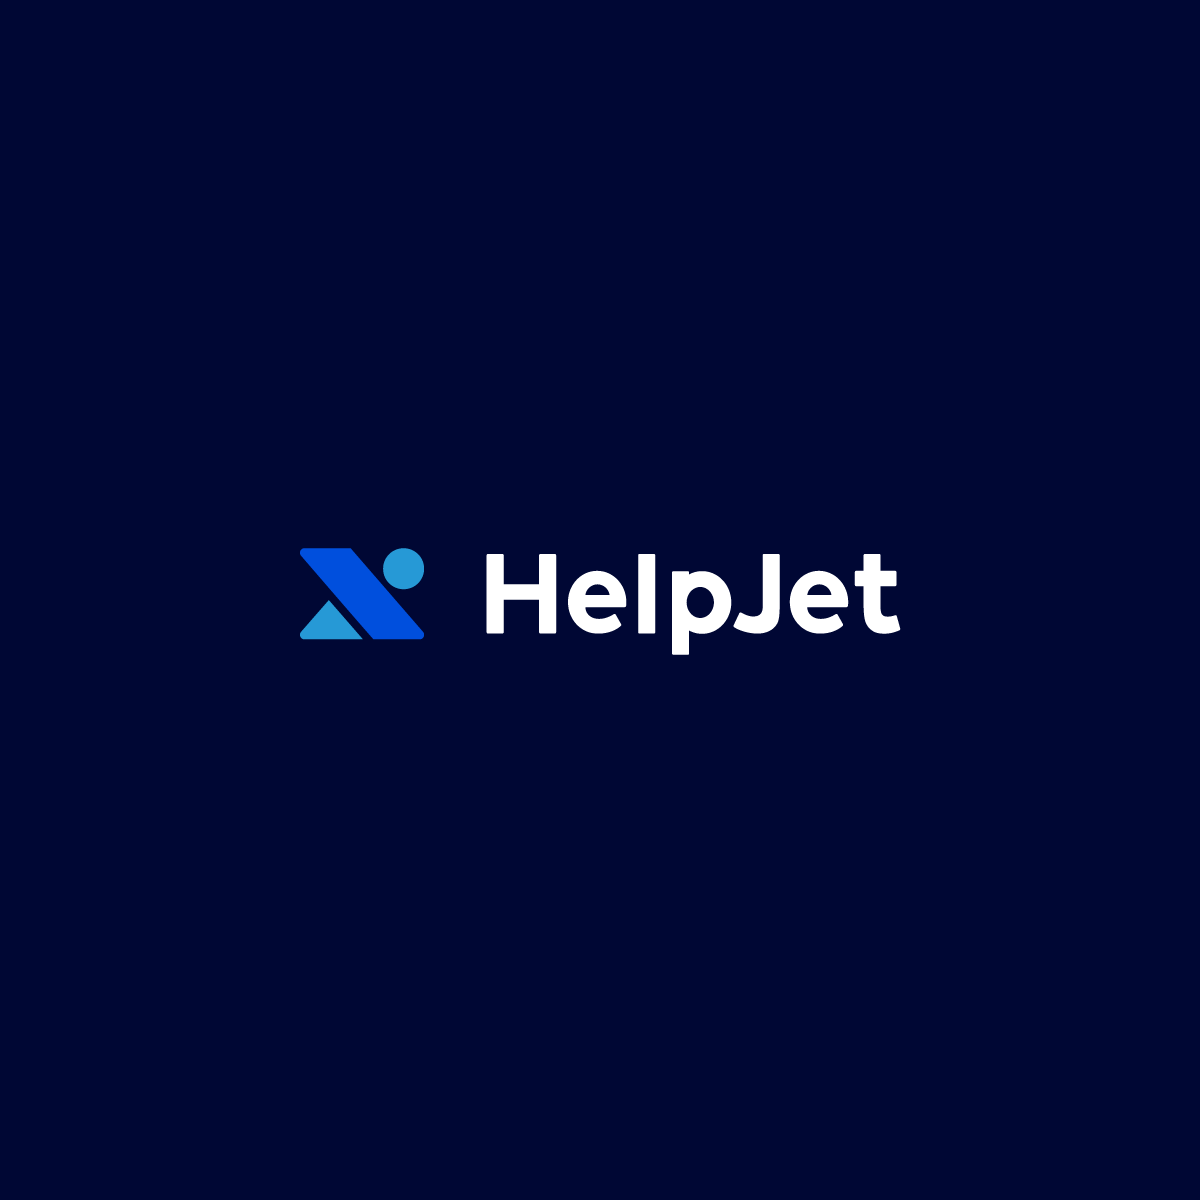 HelpJet-logo-vaslam